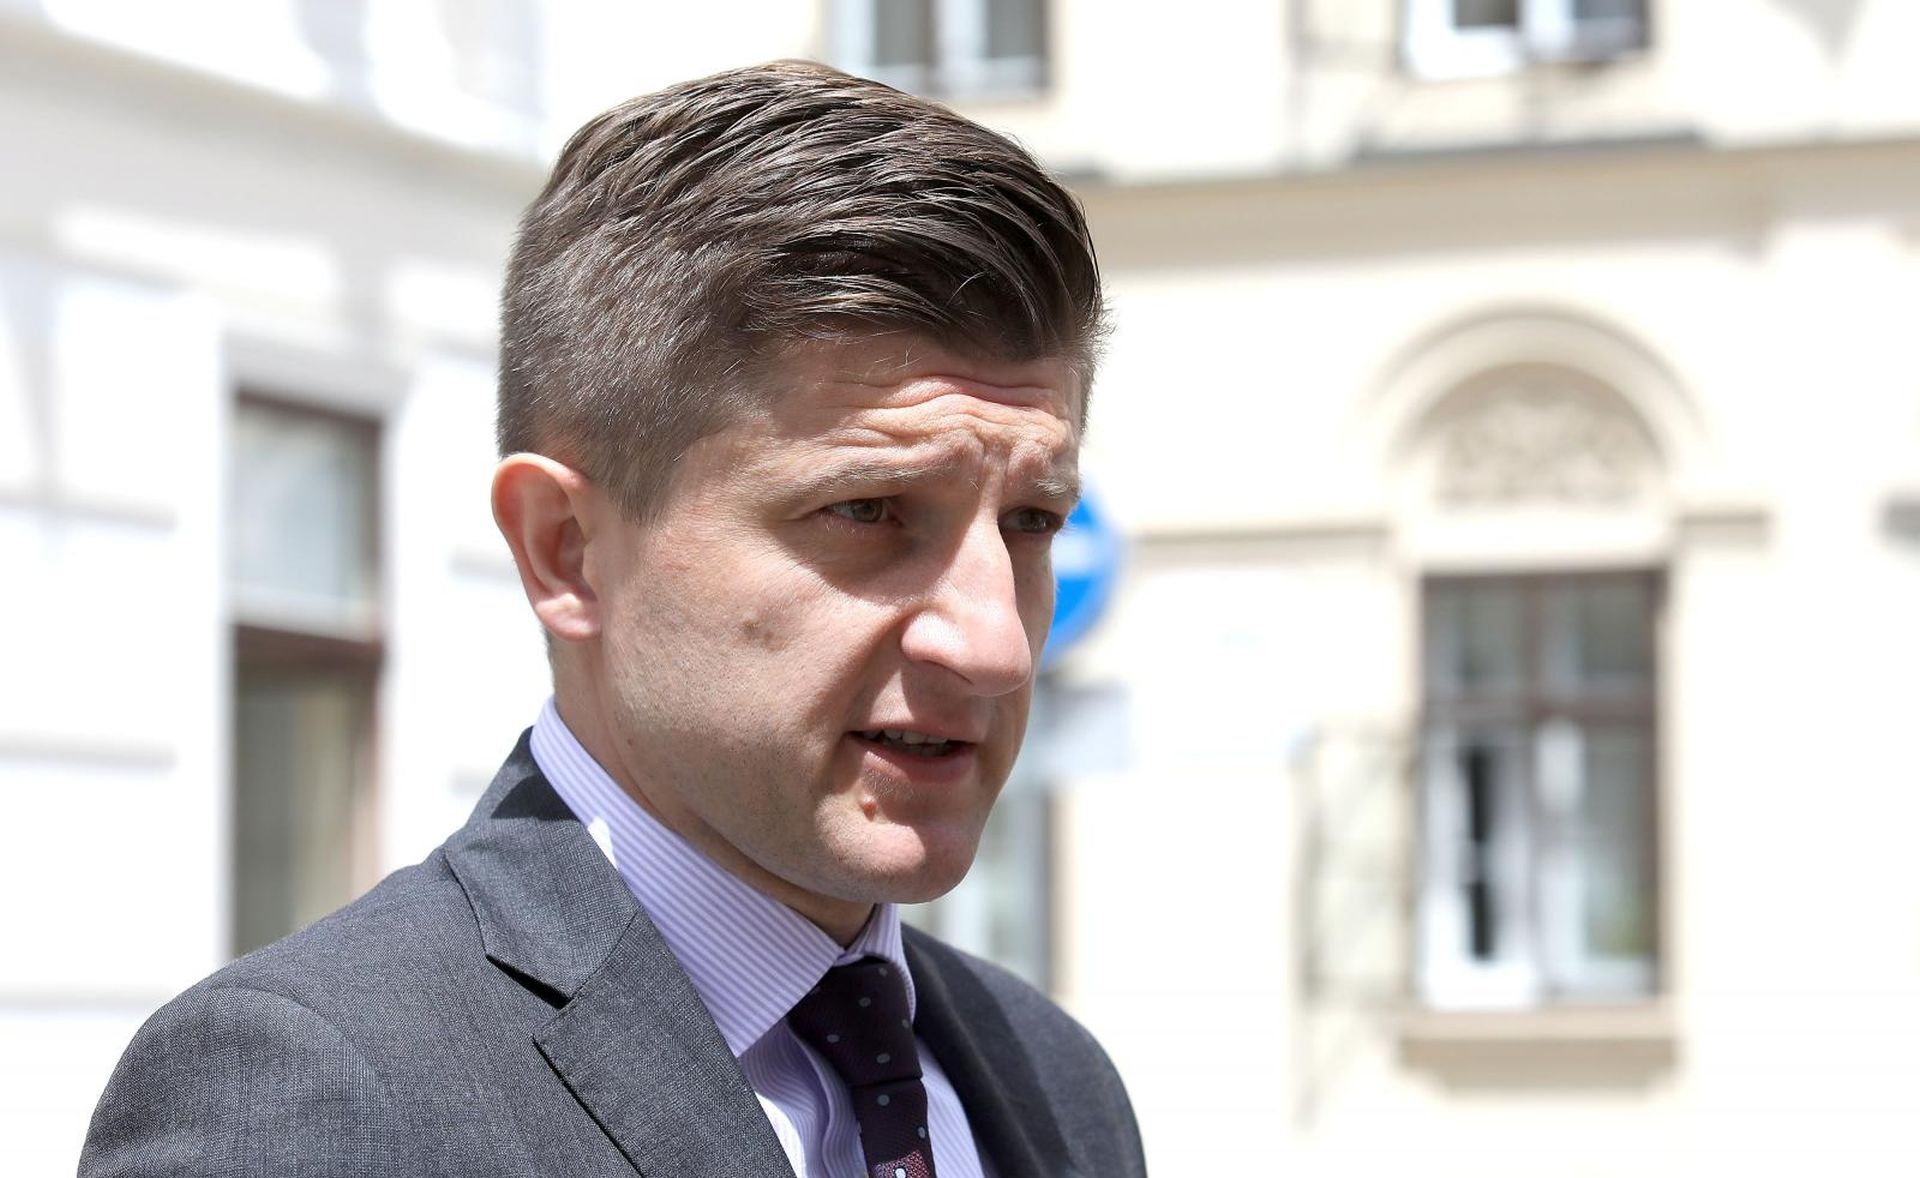 07.07.2020., Zagreb - Ministar financija Zdravko Maric komentirao je ispred Banskih dvora procjene pada BDP-a od 10,8%. Photo: Patrik Macek/PIXSELL